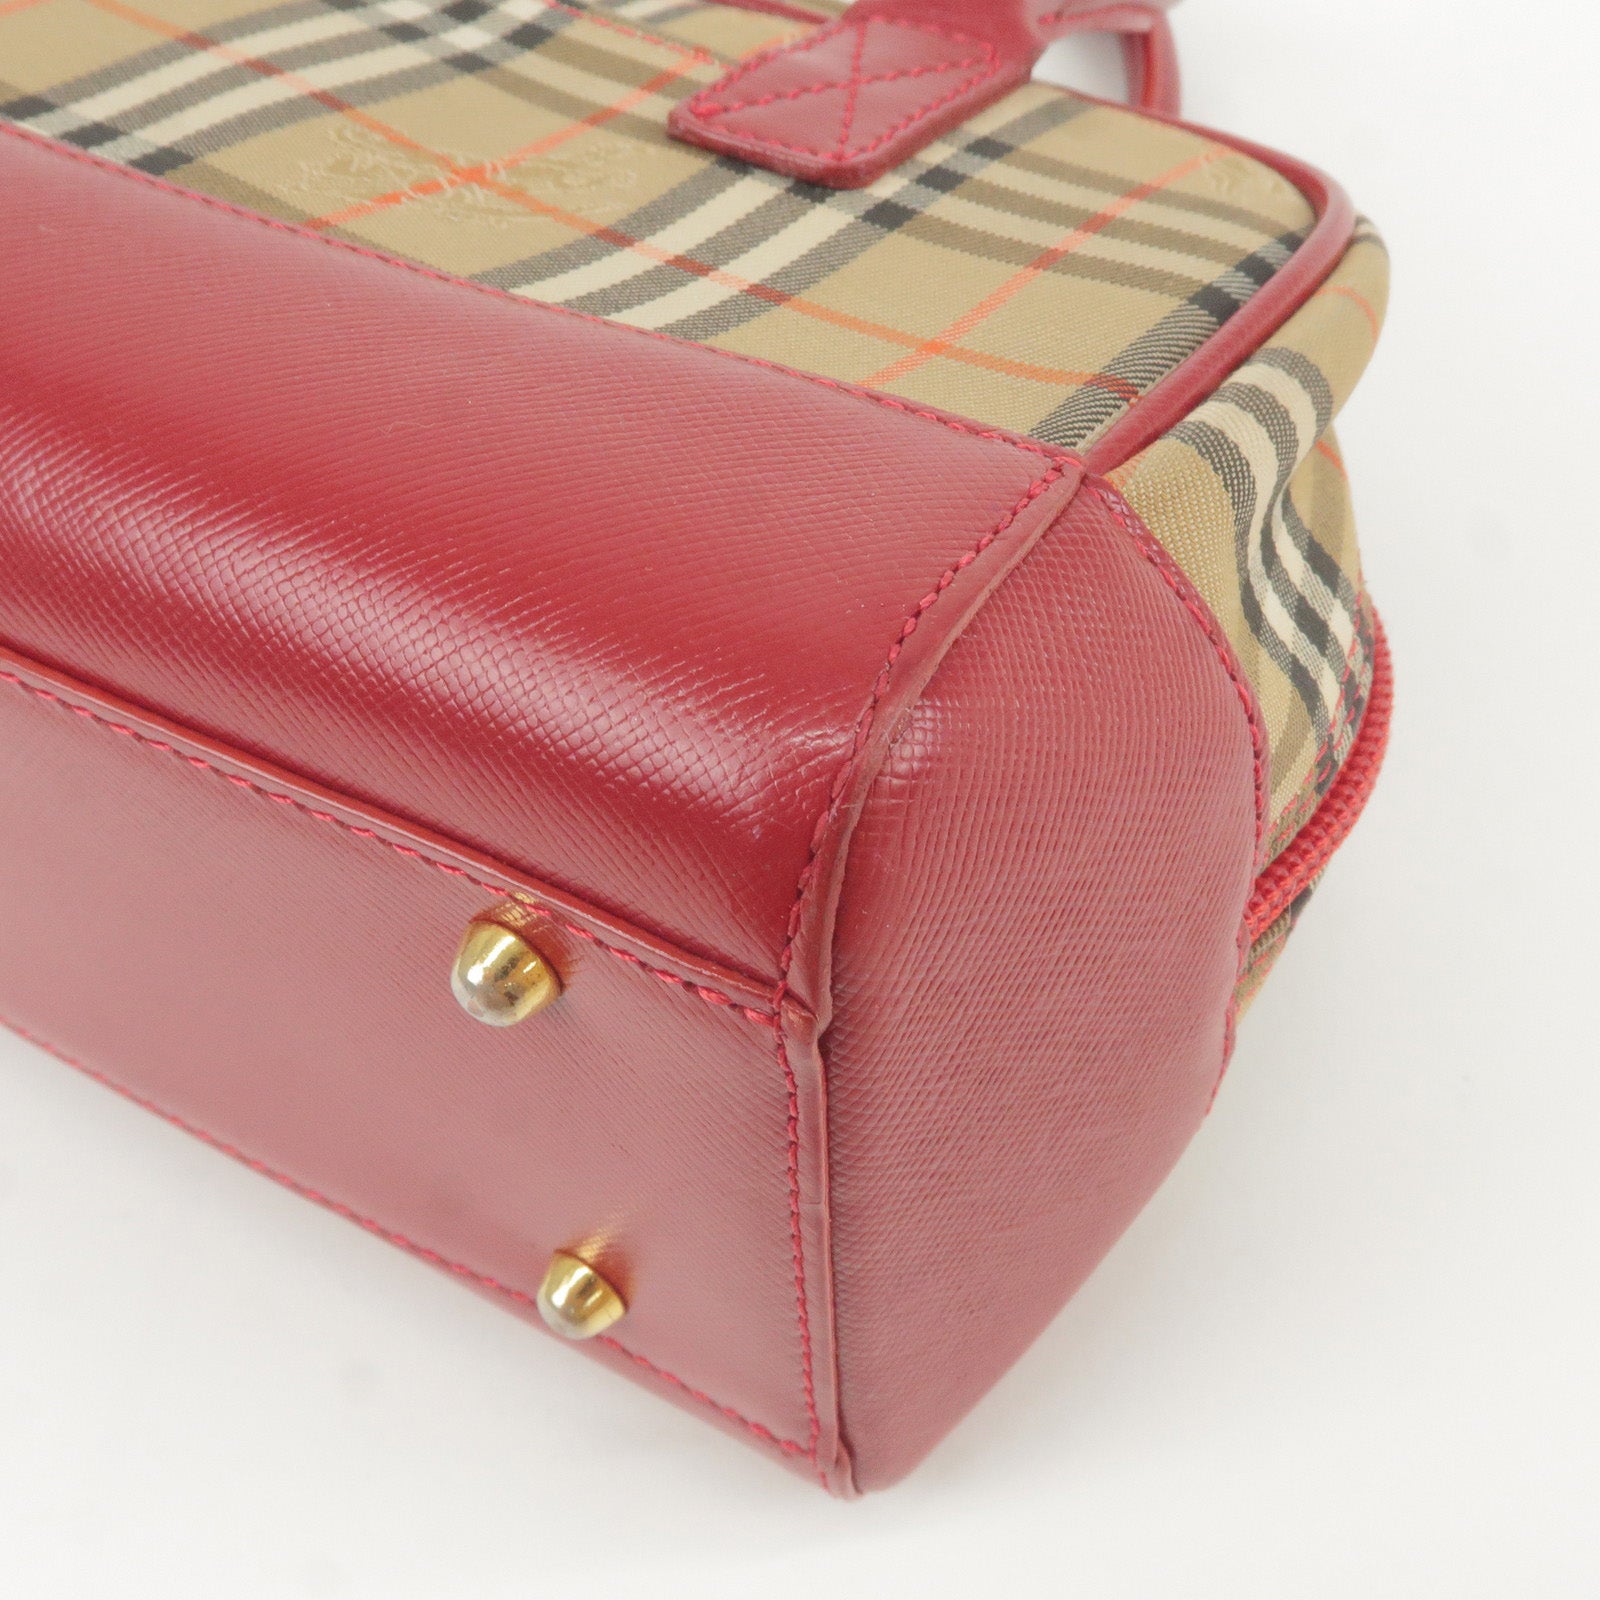 BURBERRY-Nova-Plaid-Canvas-Leather-Hand-Bag-Beige-Red – dct